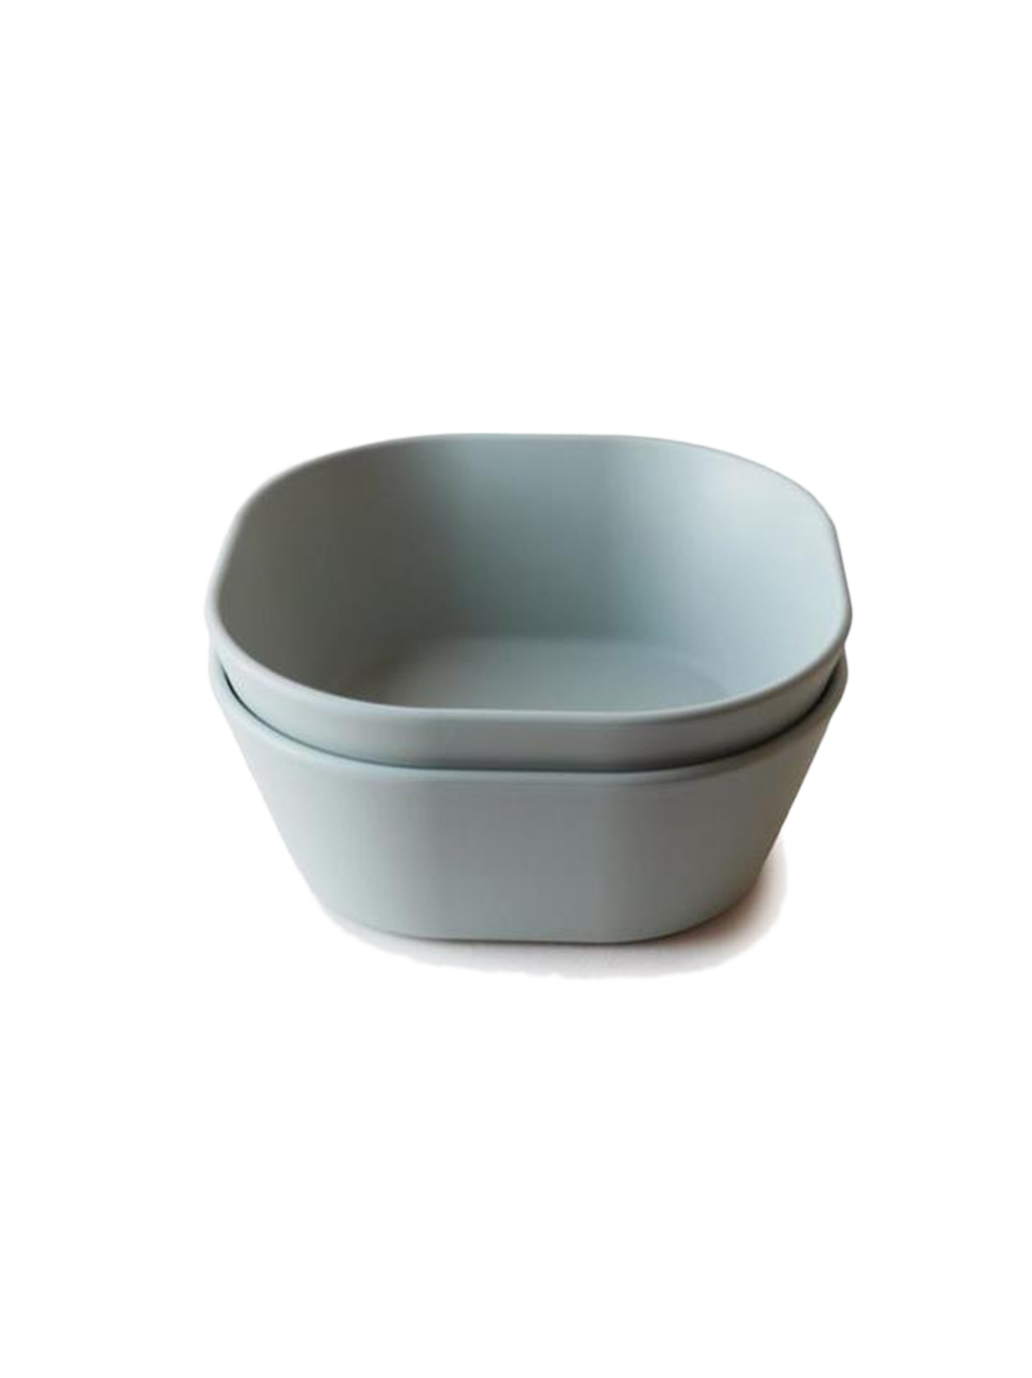 Square dinnerware bowl set of 2